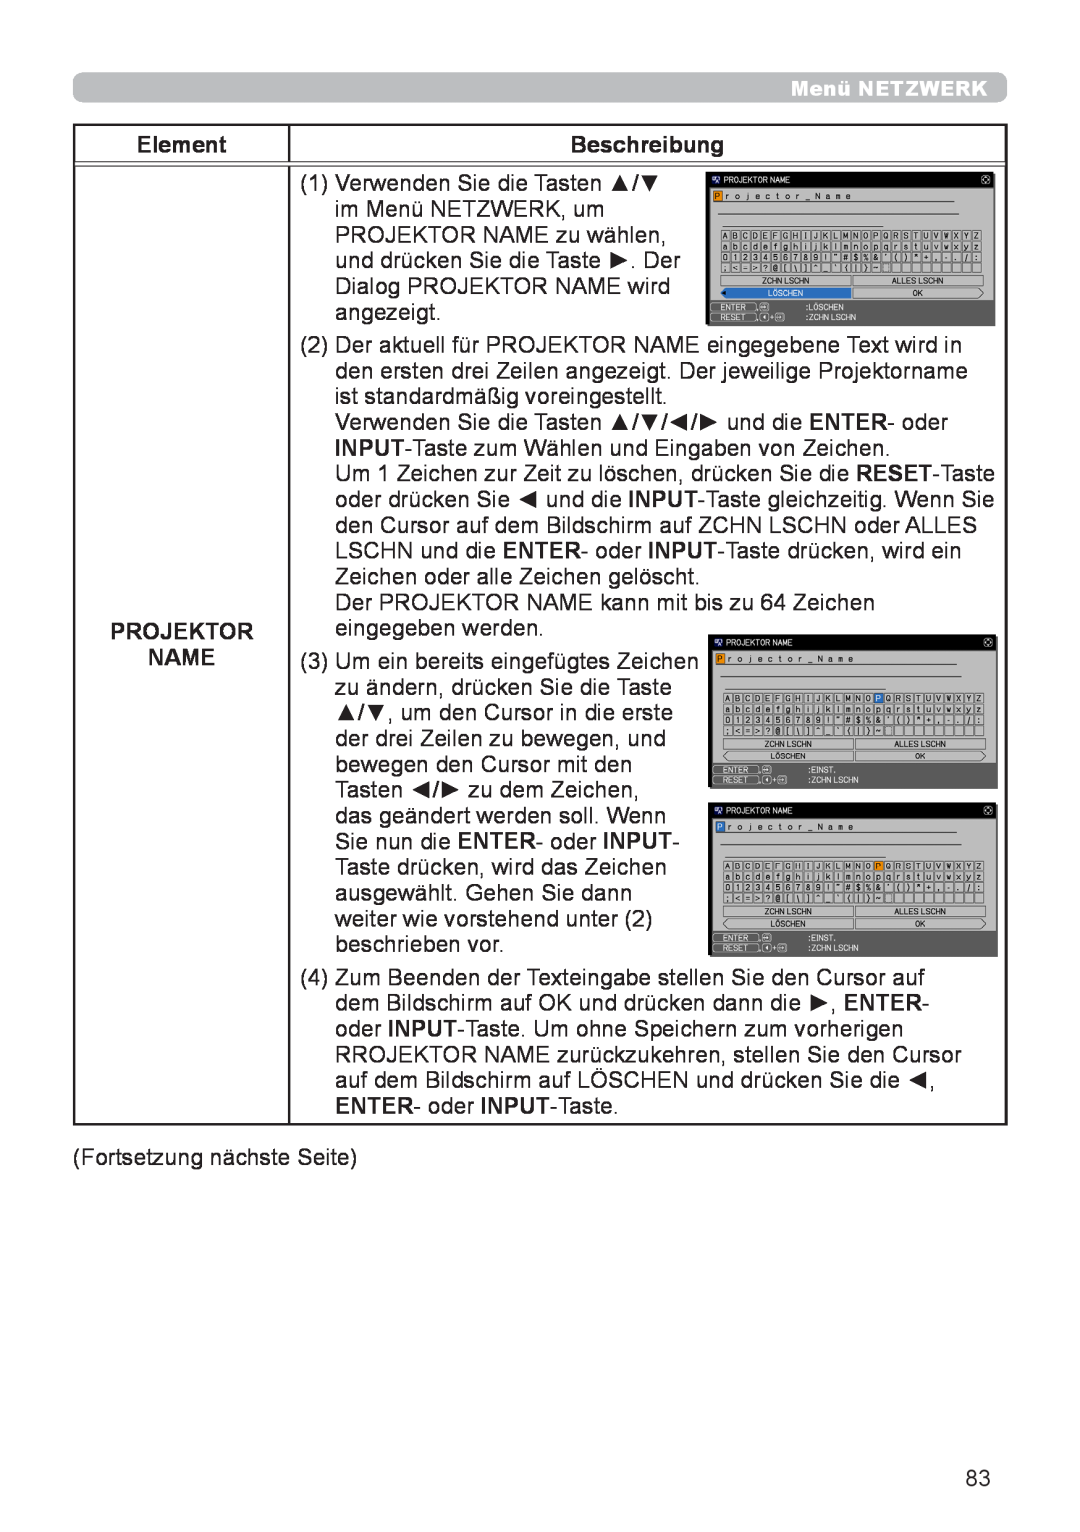 InFocus IN5132 user manual Element, Beschreibung, Projektor Name 